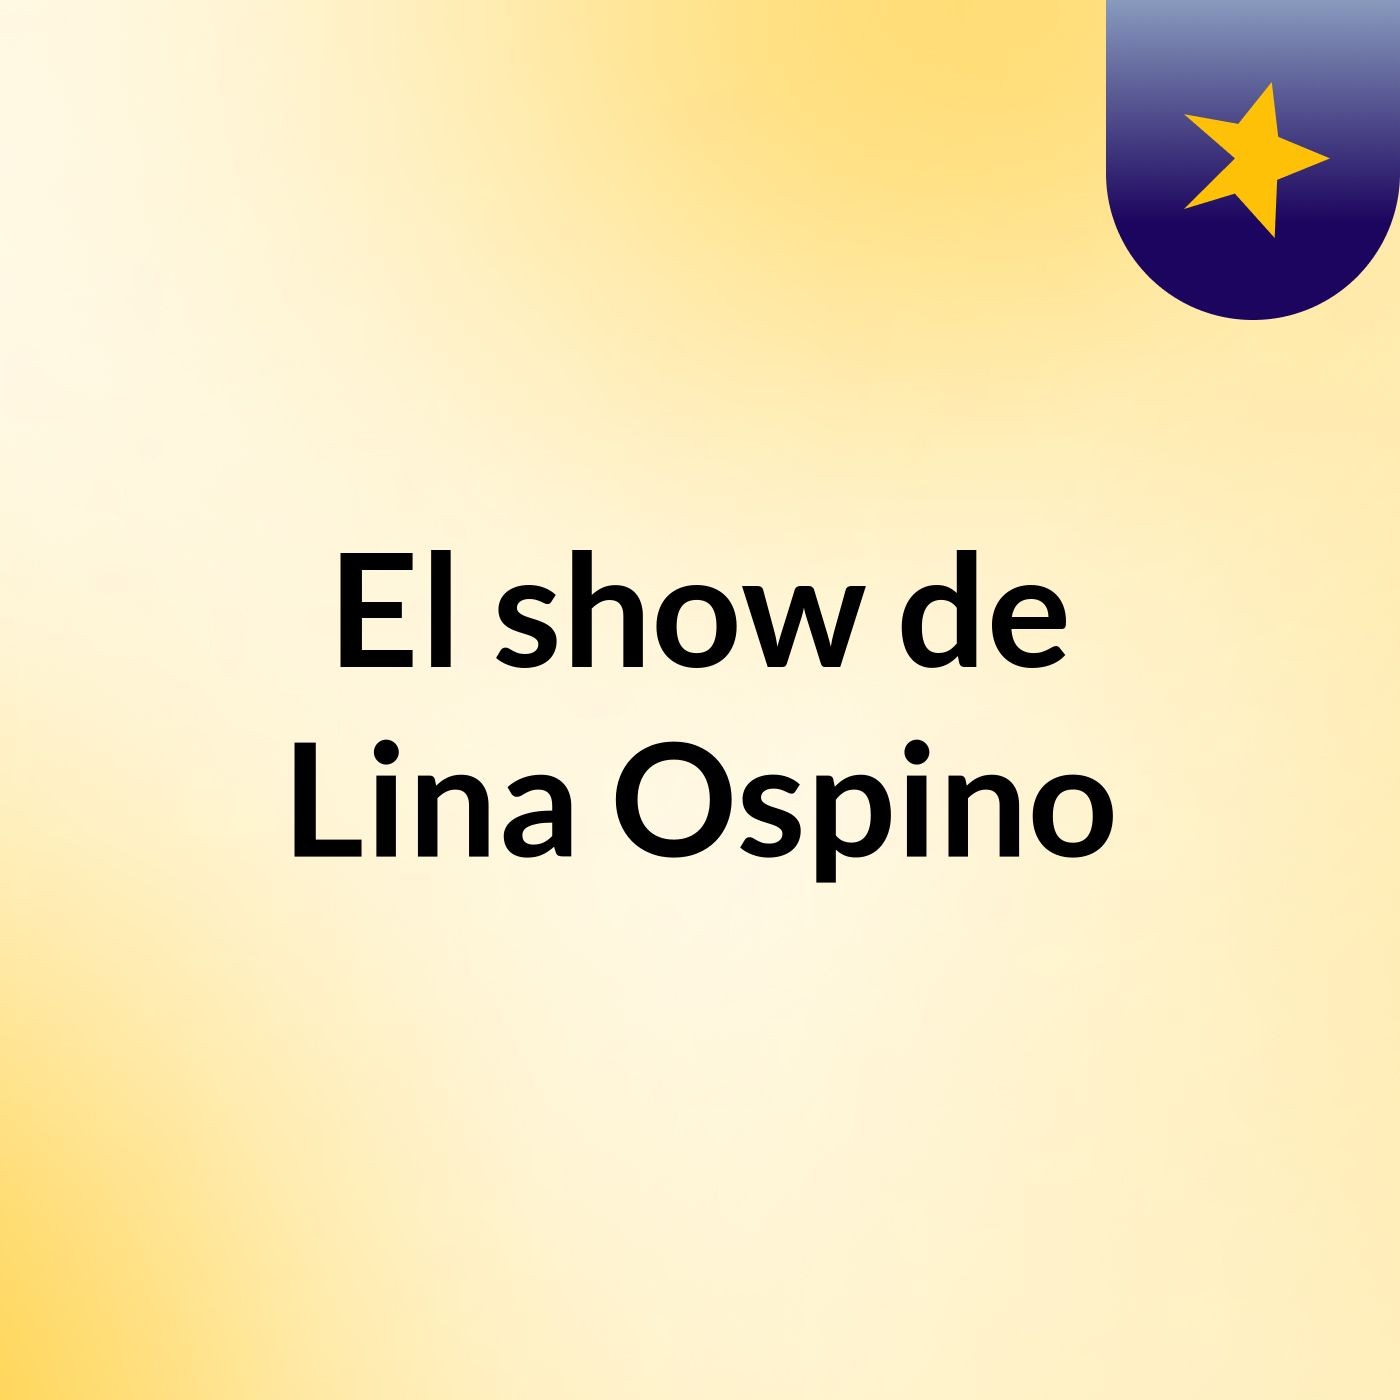 El show de Lina Ospino